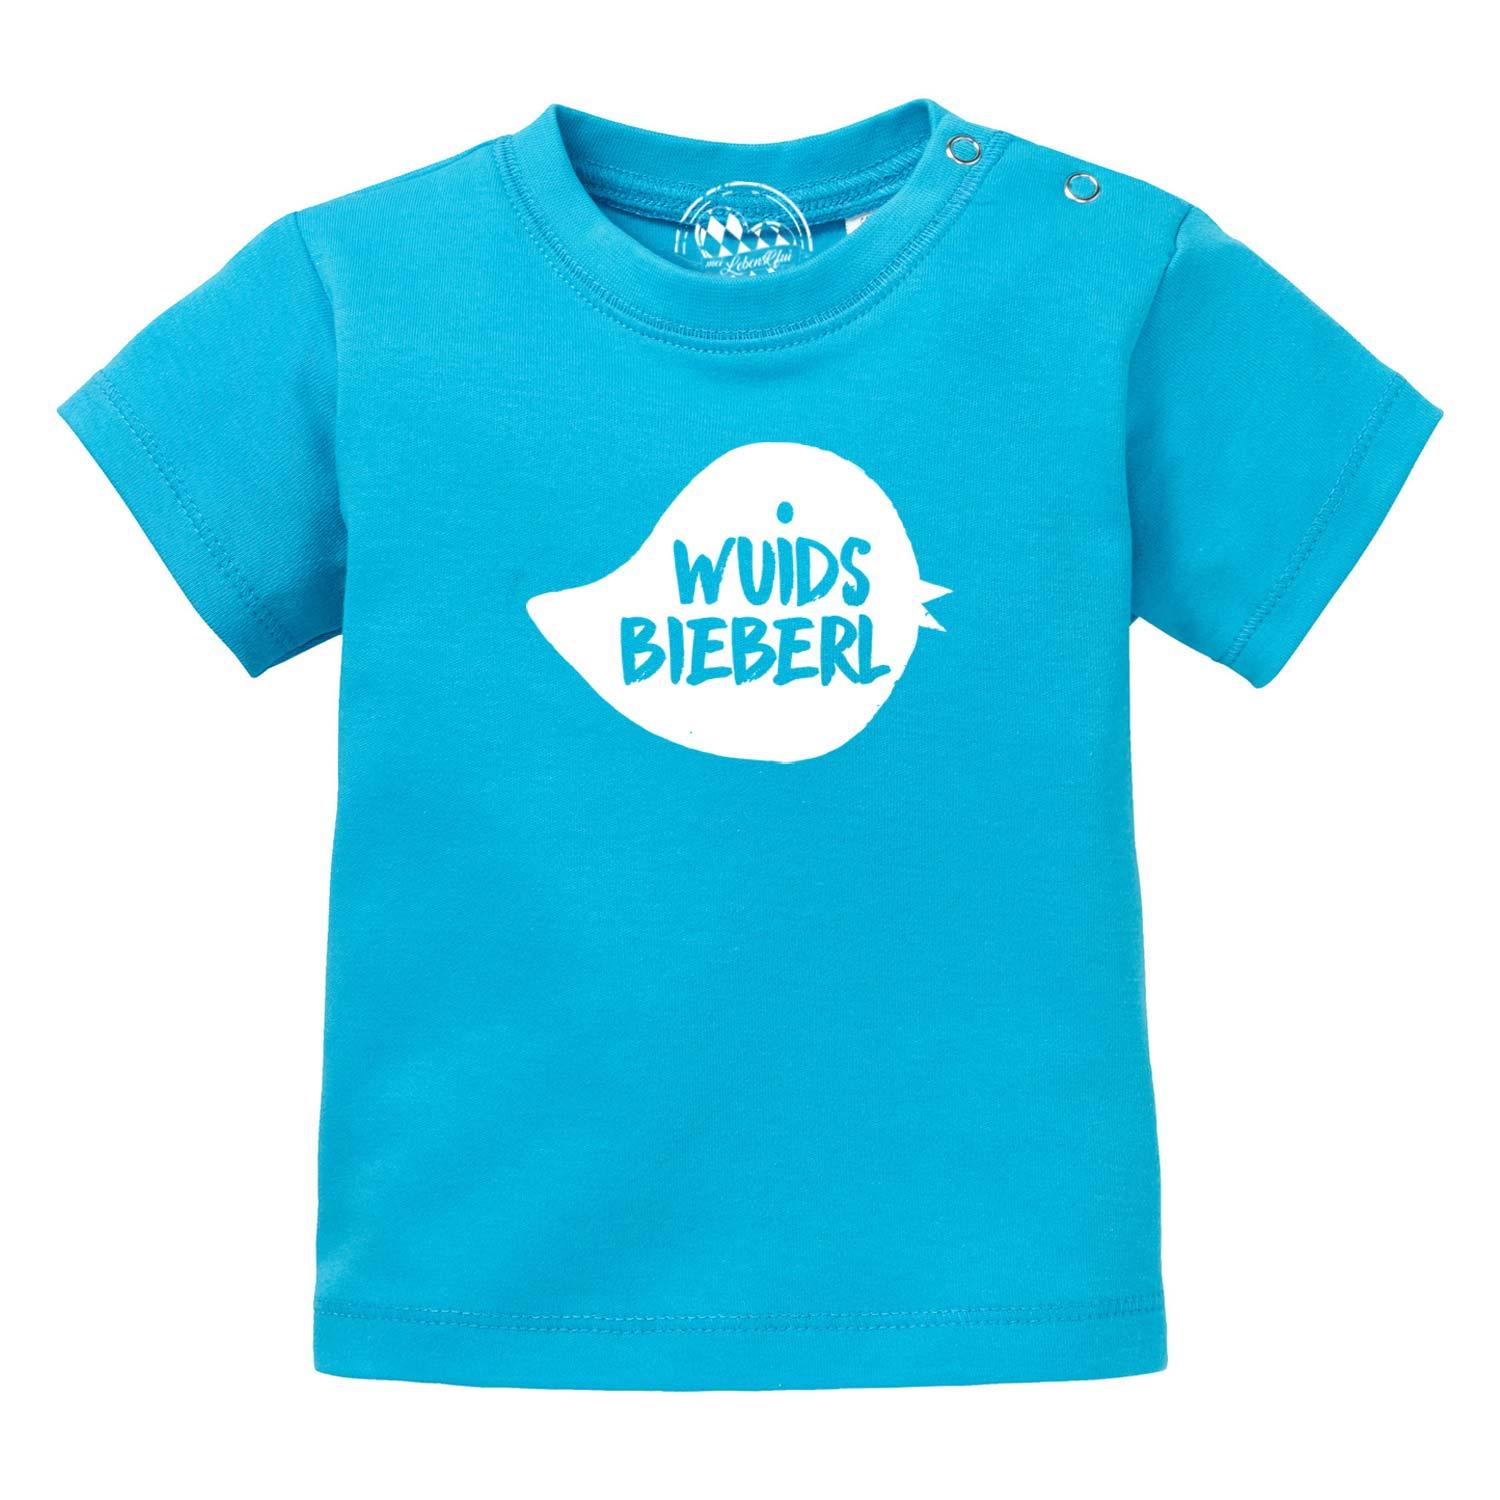 Baby T-Shirt "Wuids Bieberl" - bavariashop - mei LebensGfui